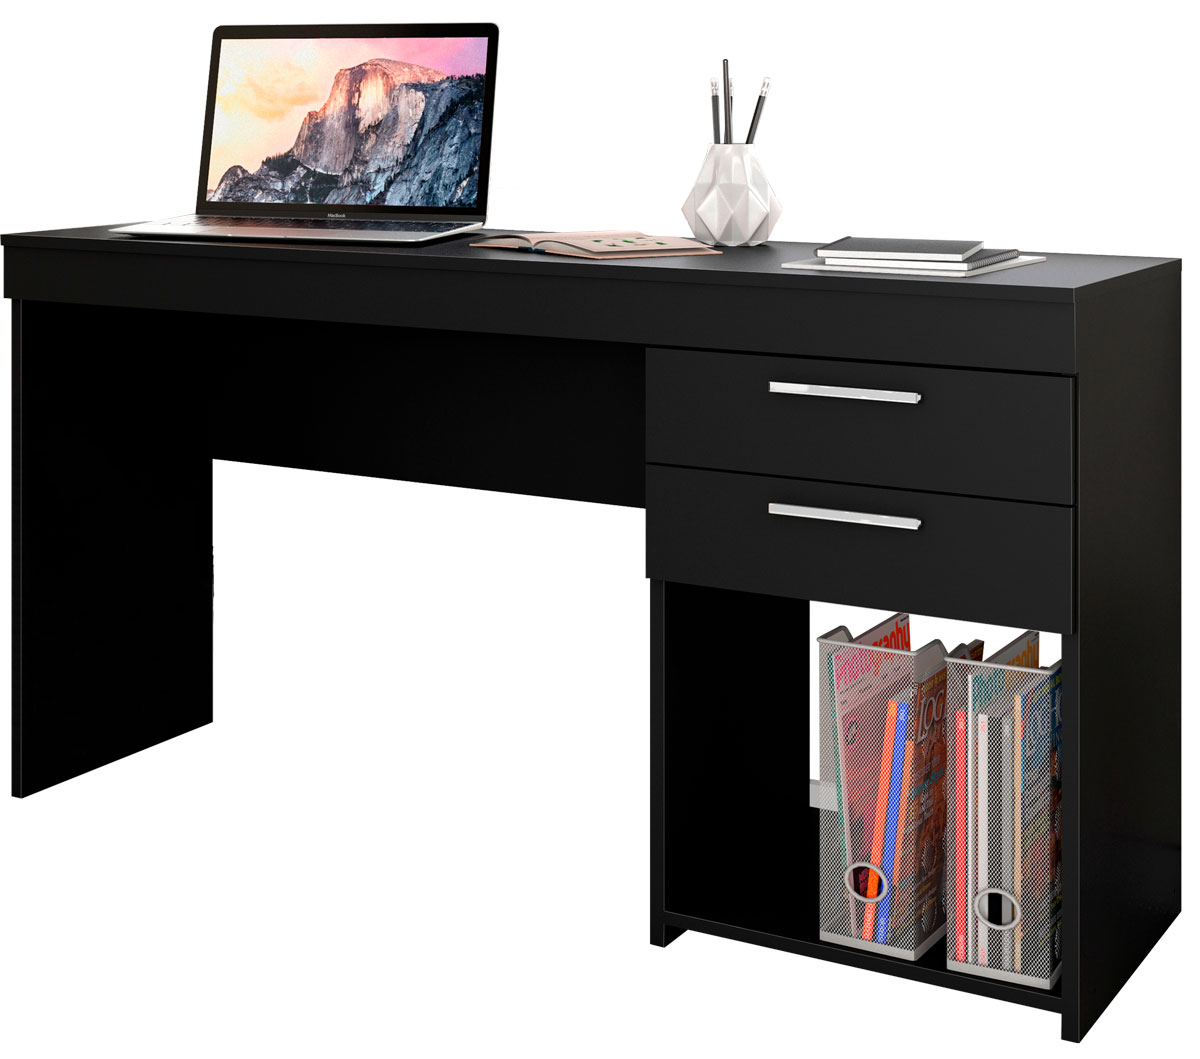 Mesa para Computador Office Preto - Notável